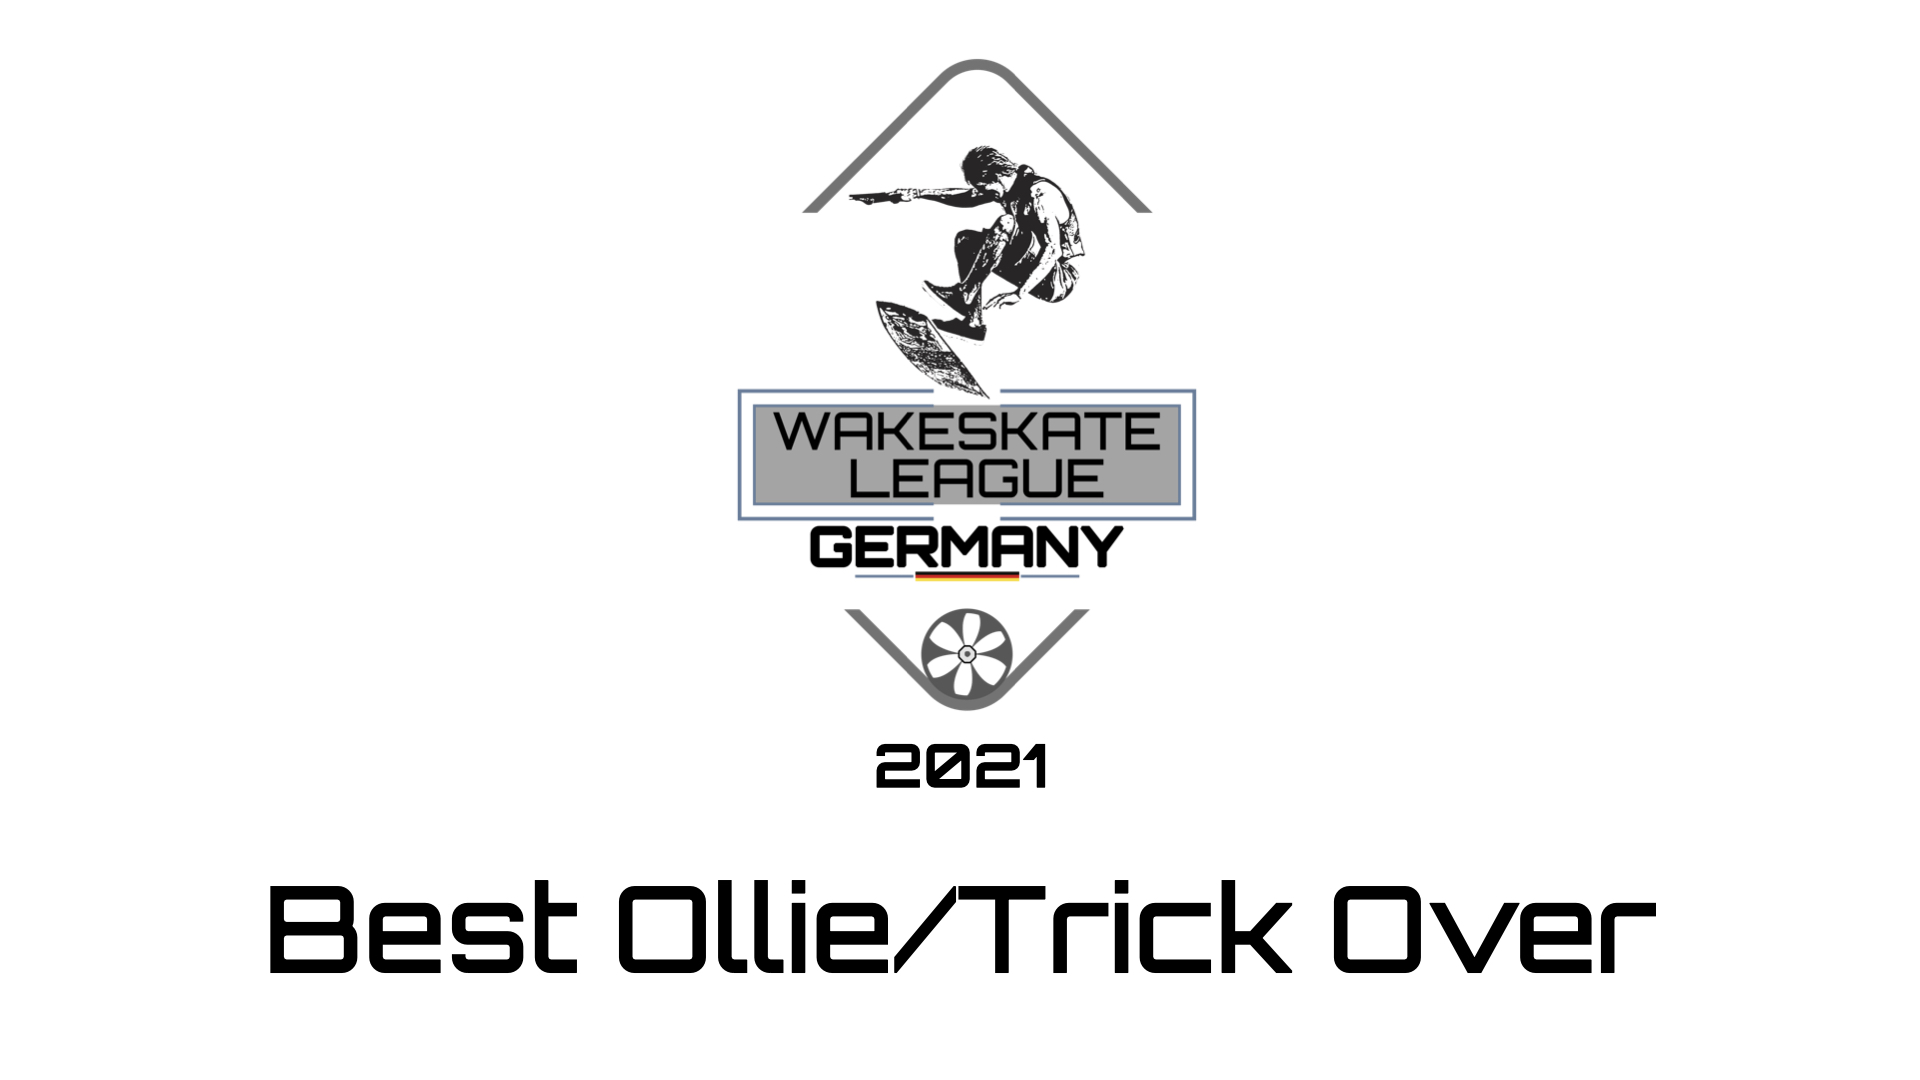 Wakeskate League Germany 2021 - #7 Best Ollie/Trick Over